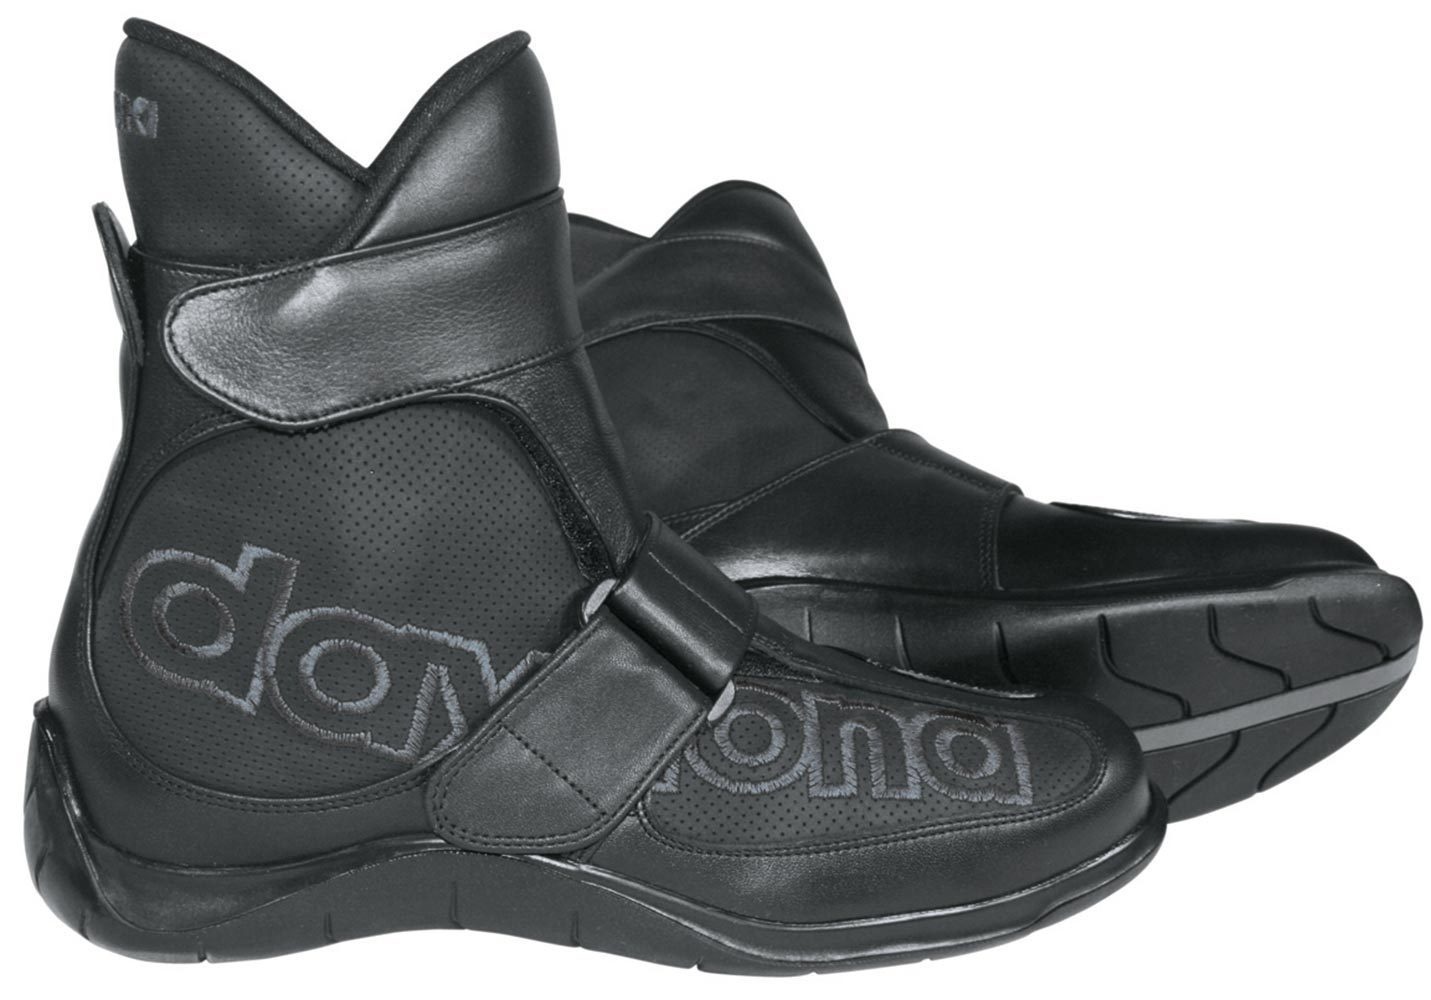 Daytona Shorty Motorradschuhe, schwarz, Größe 36